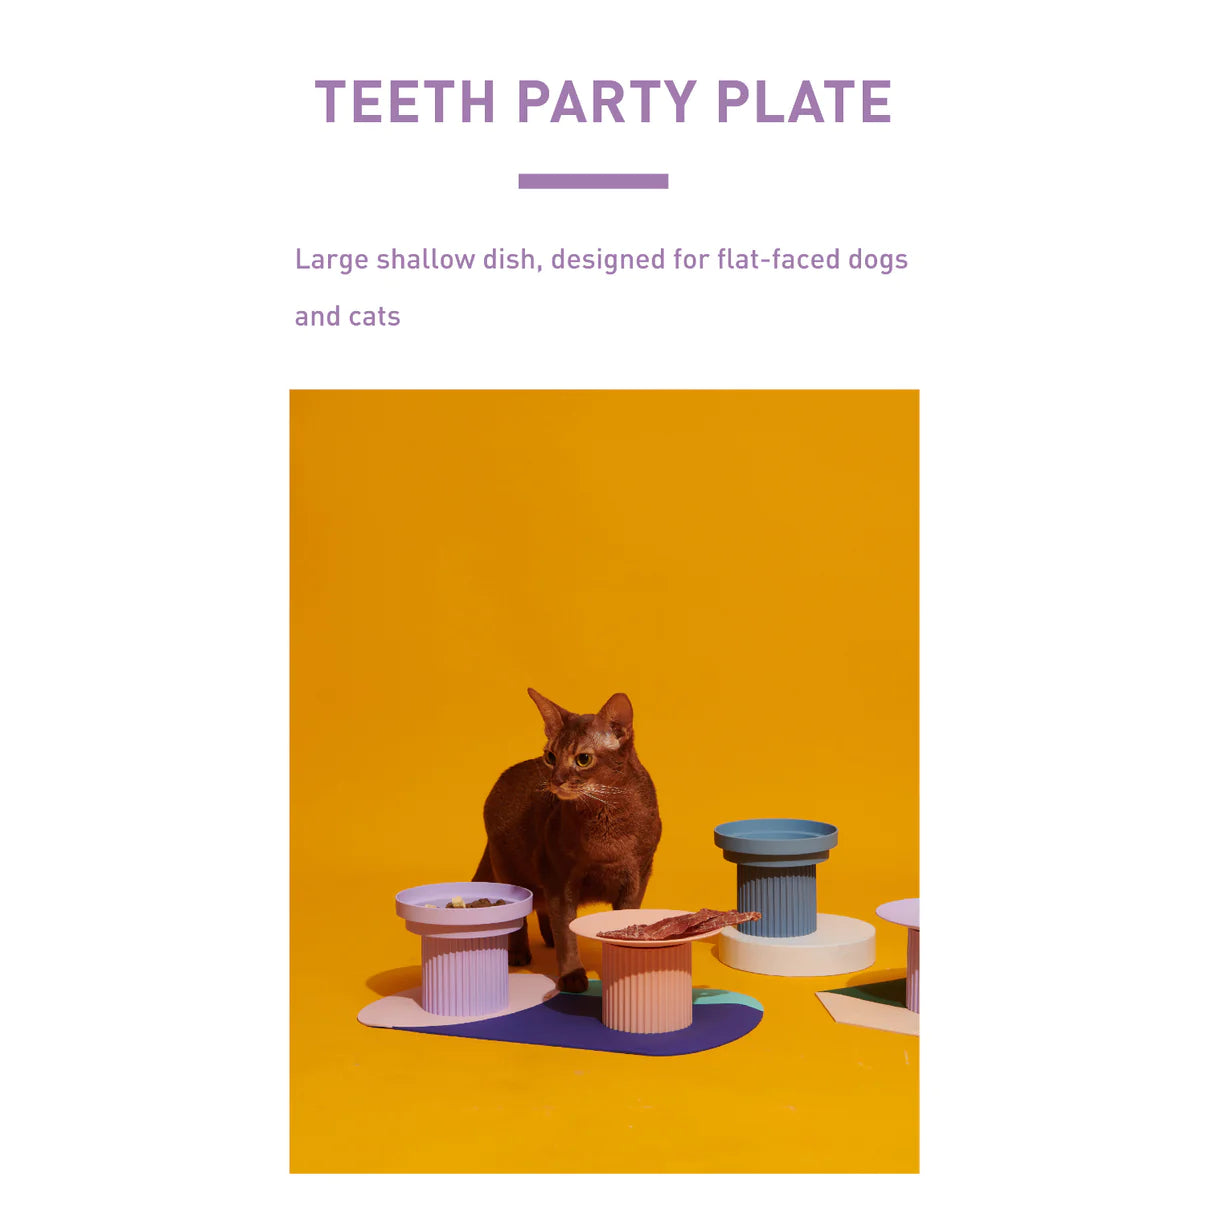 Teeth Party Set